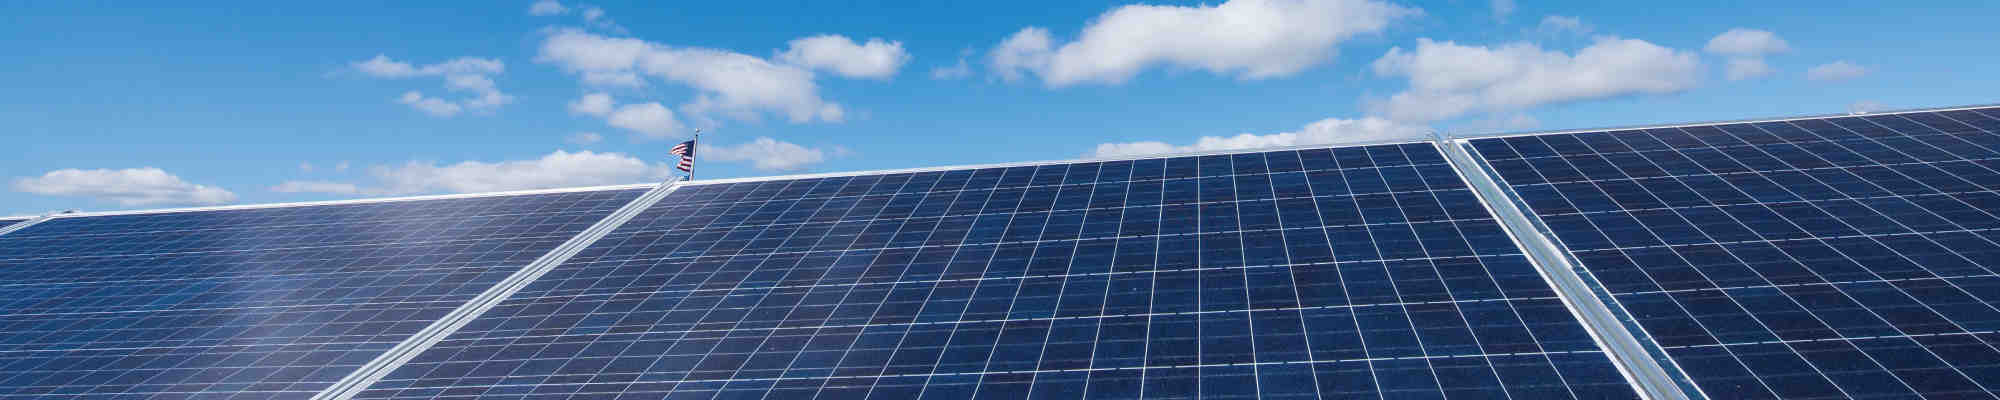 Will solar panels get cheaper in 2022?